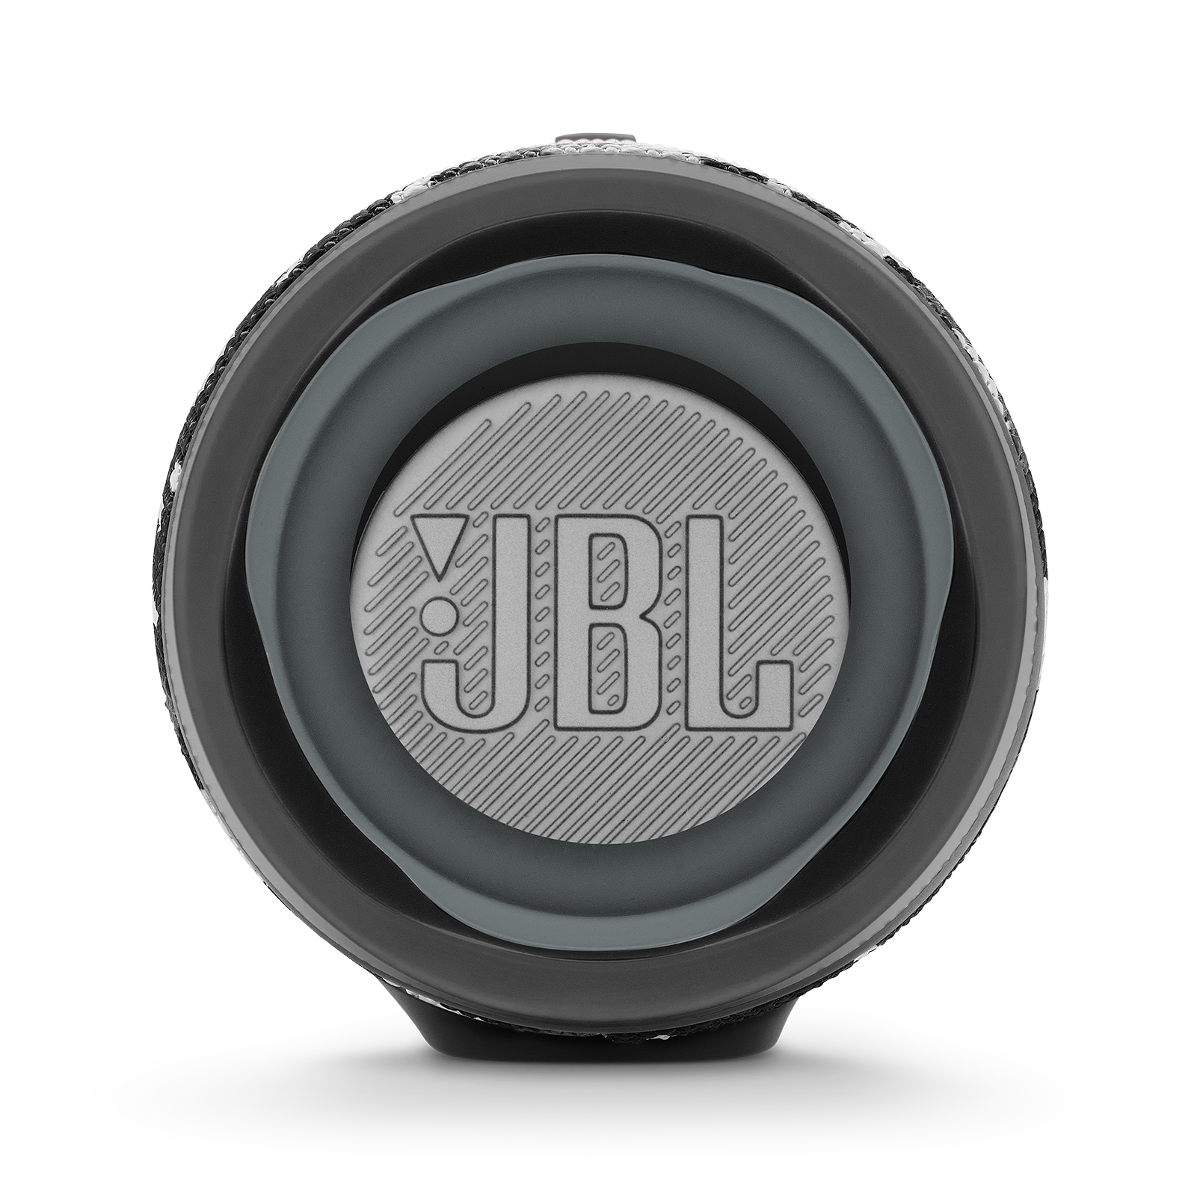 Charge Bluetooth JBL White Wasserfest Camouflage, 4 Lautsprecher,